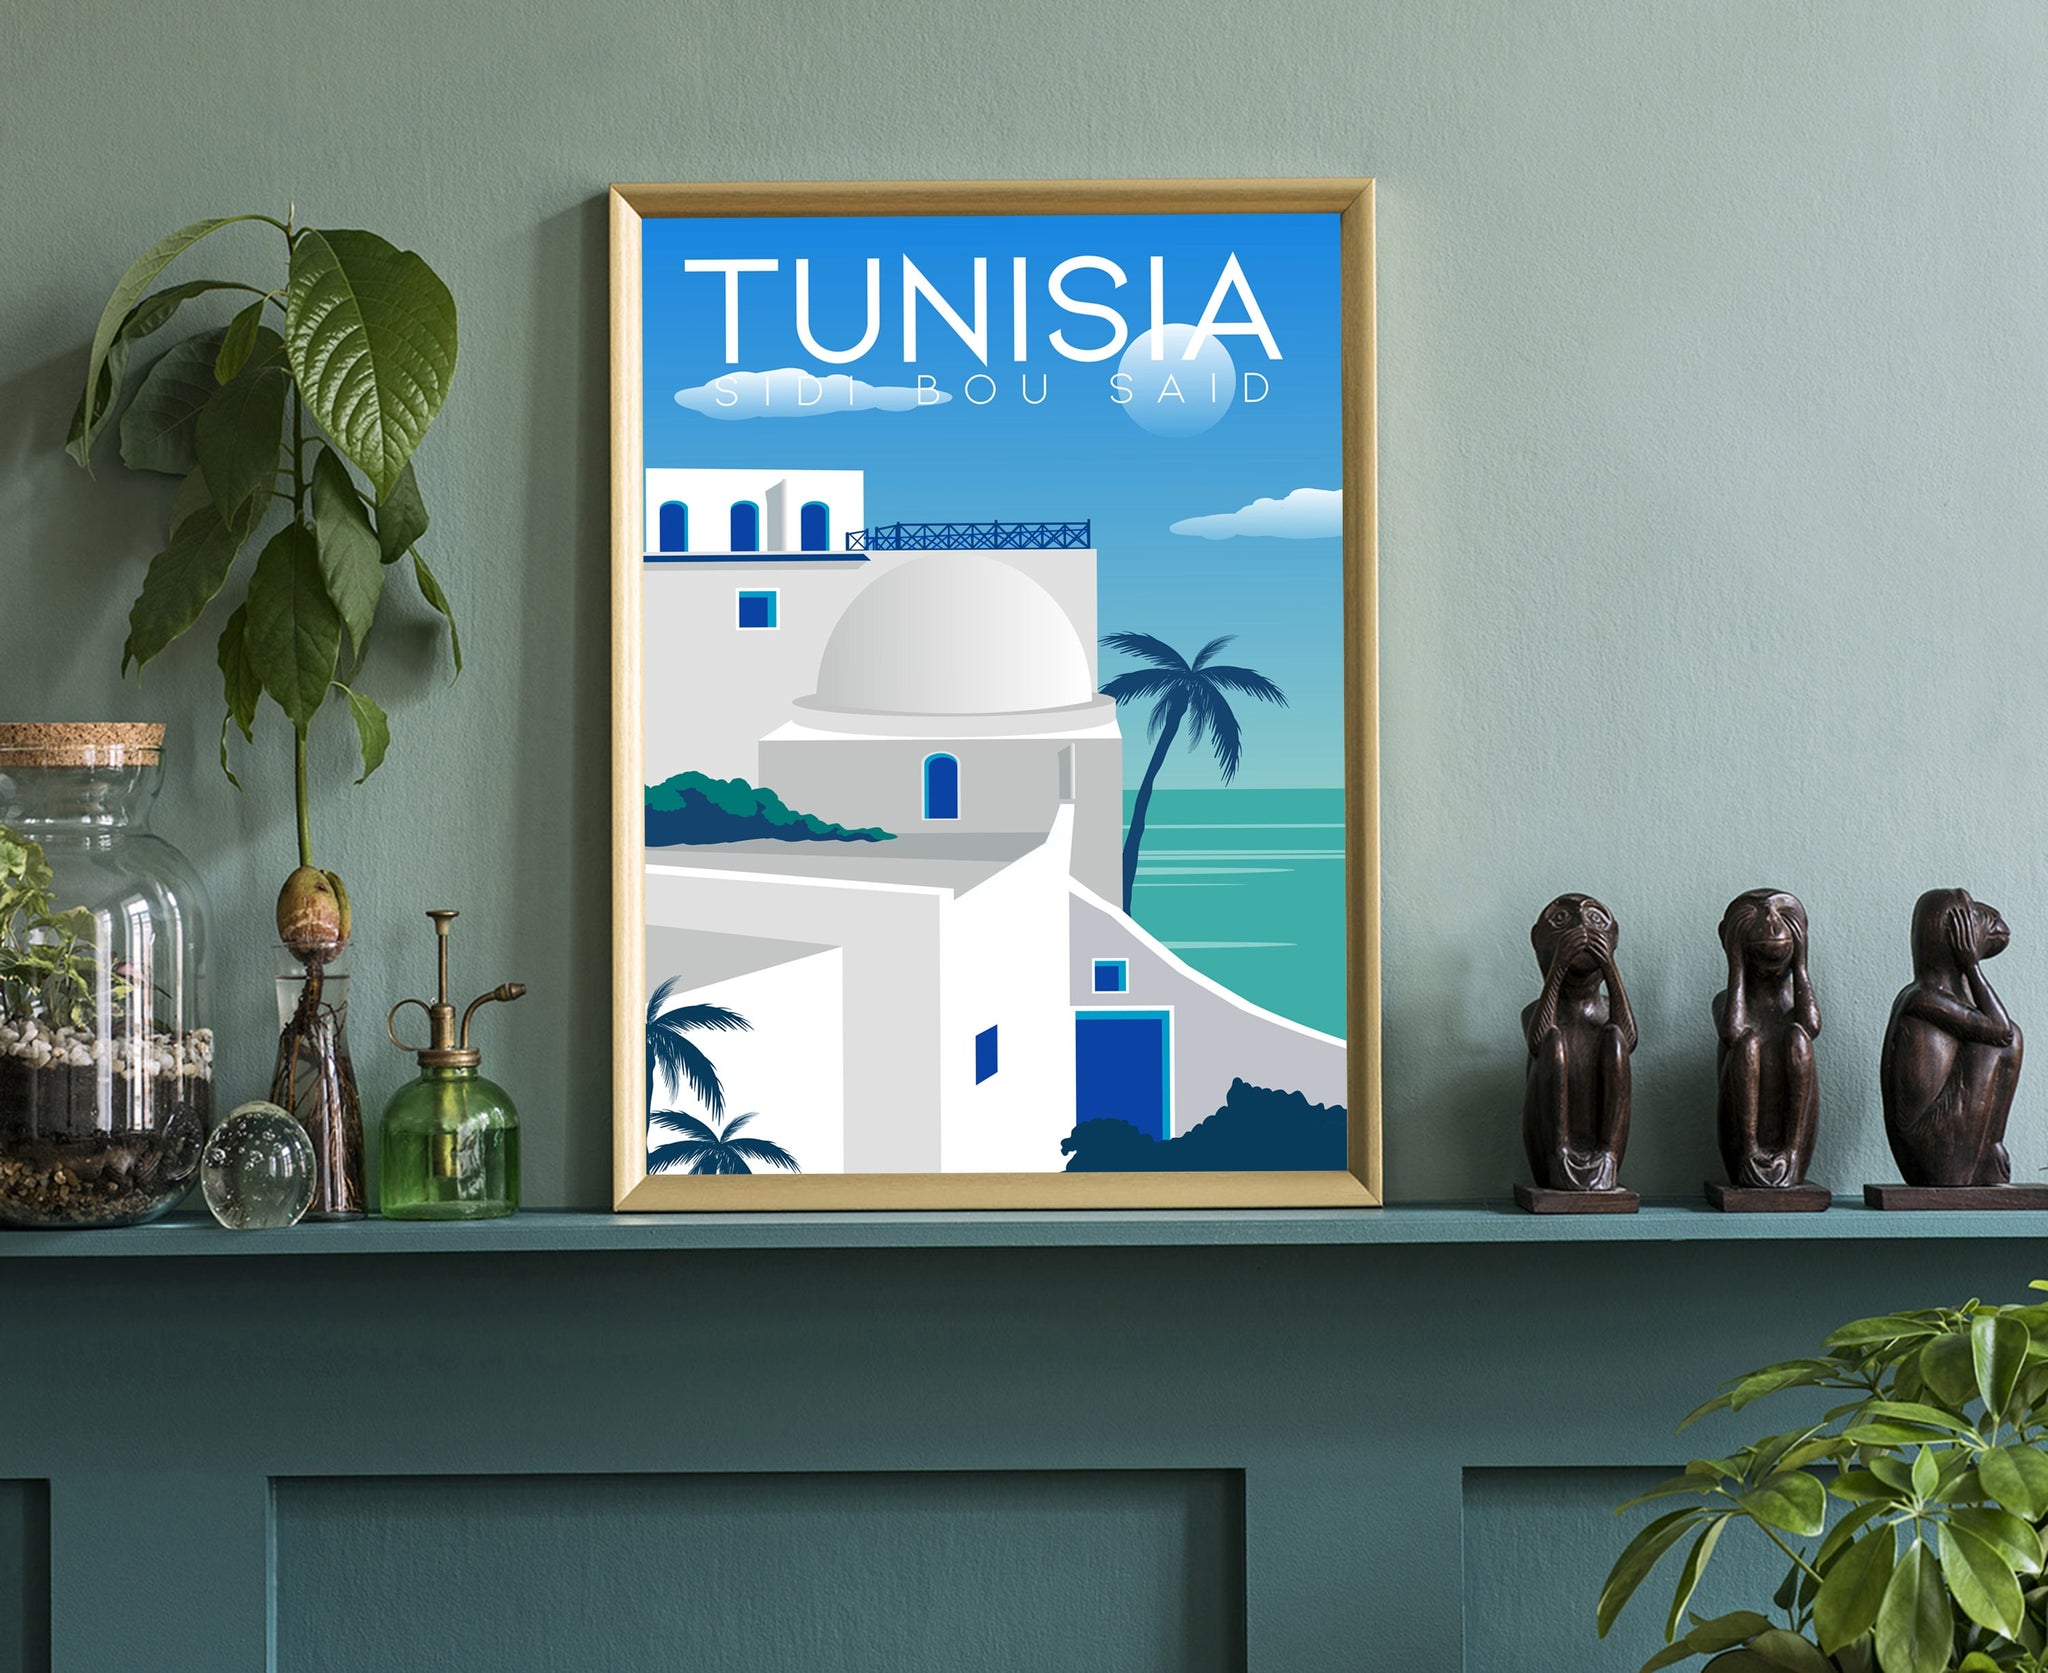 TUNISIA TRAVEL POSTER, Tunisia Cityscape and Landmark Poster Wall Art, Home Wall Art, Office Wall Decor